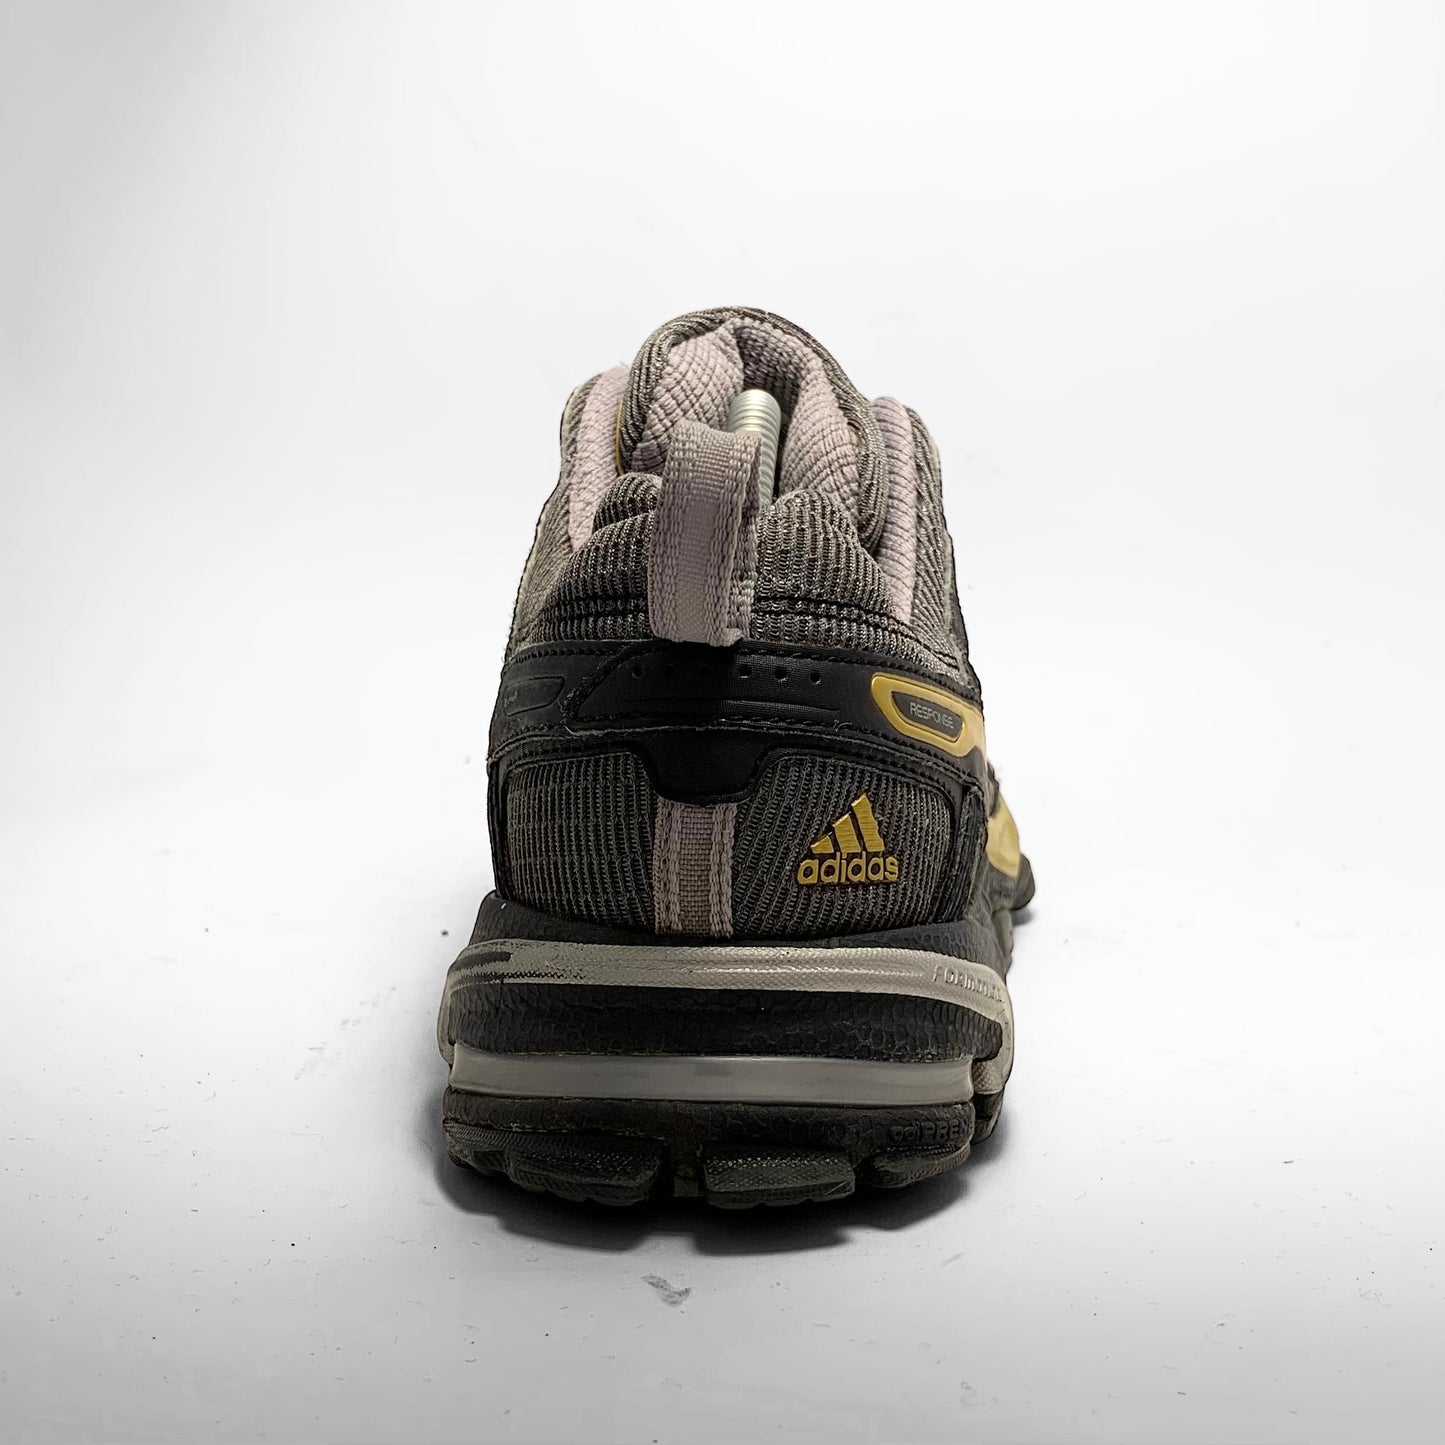 Adidas Trail Response GTX (2010)